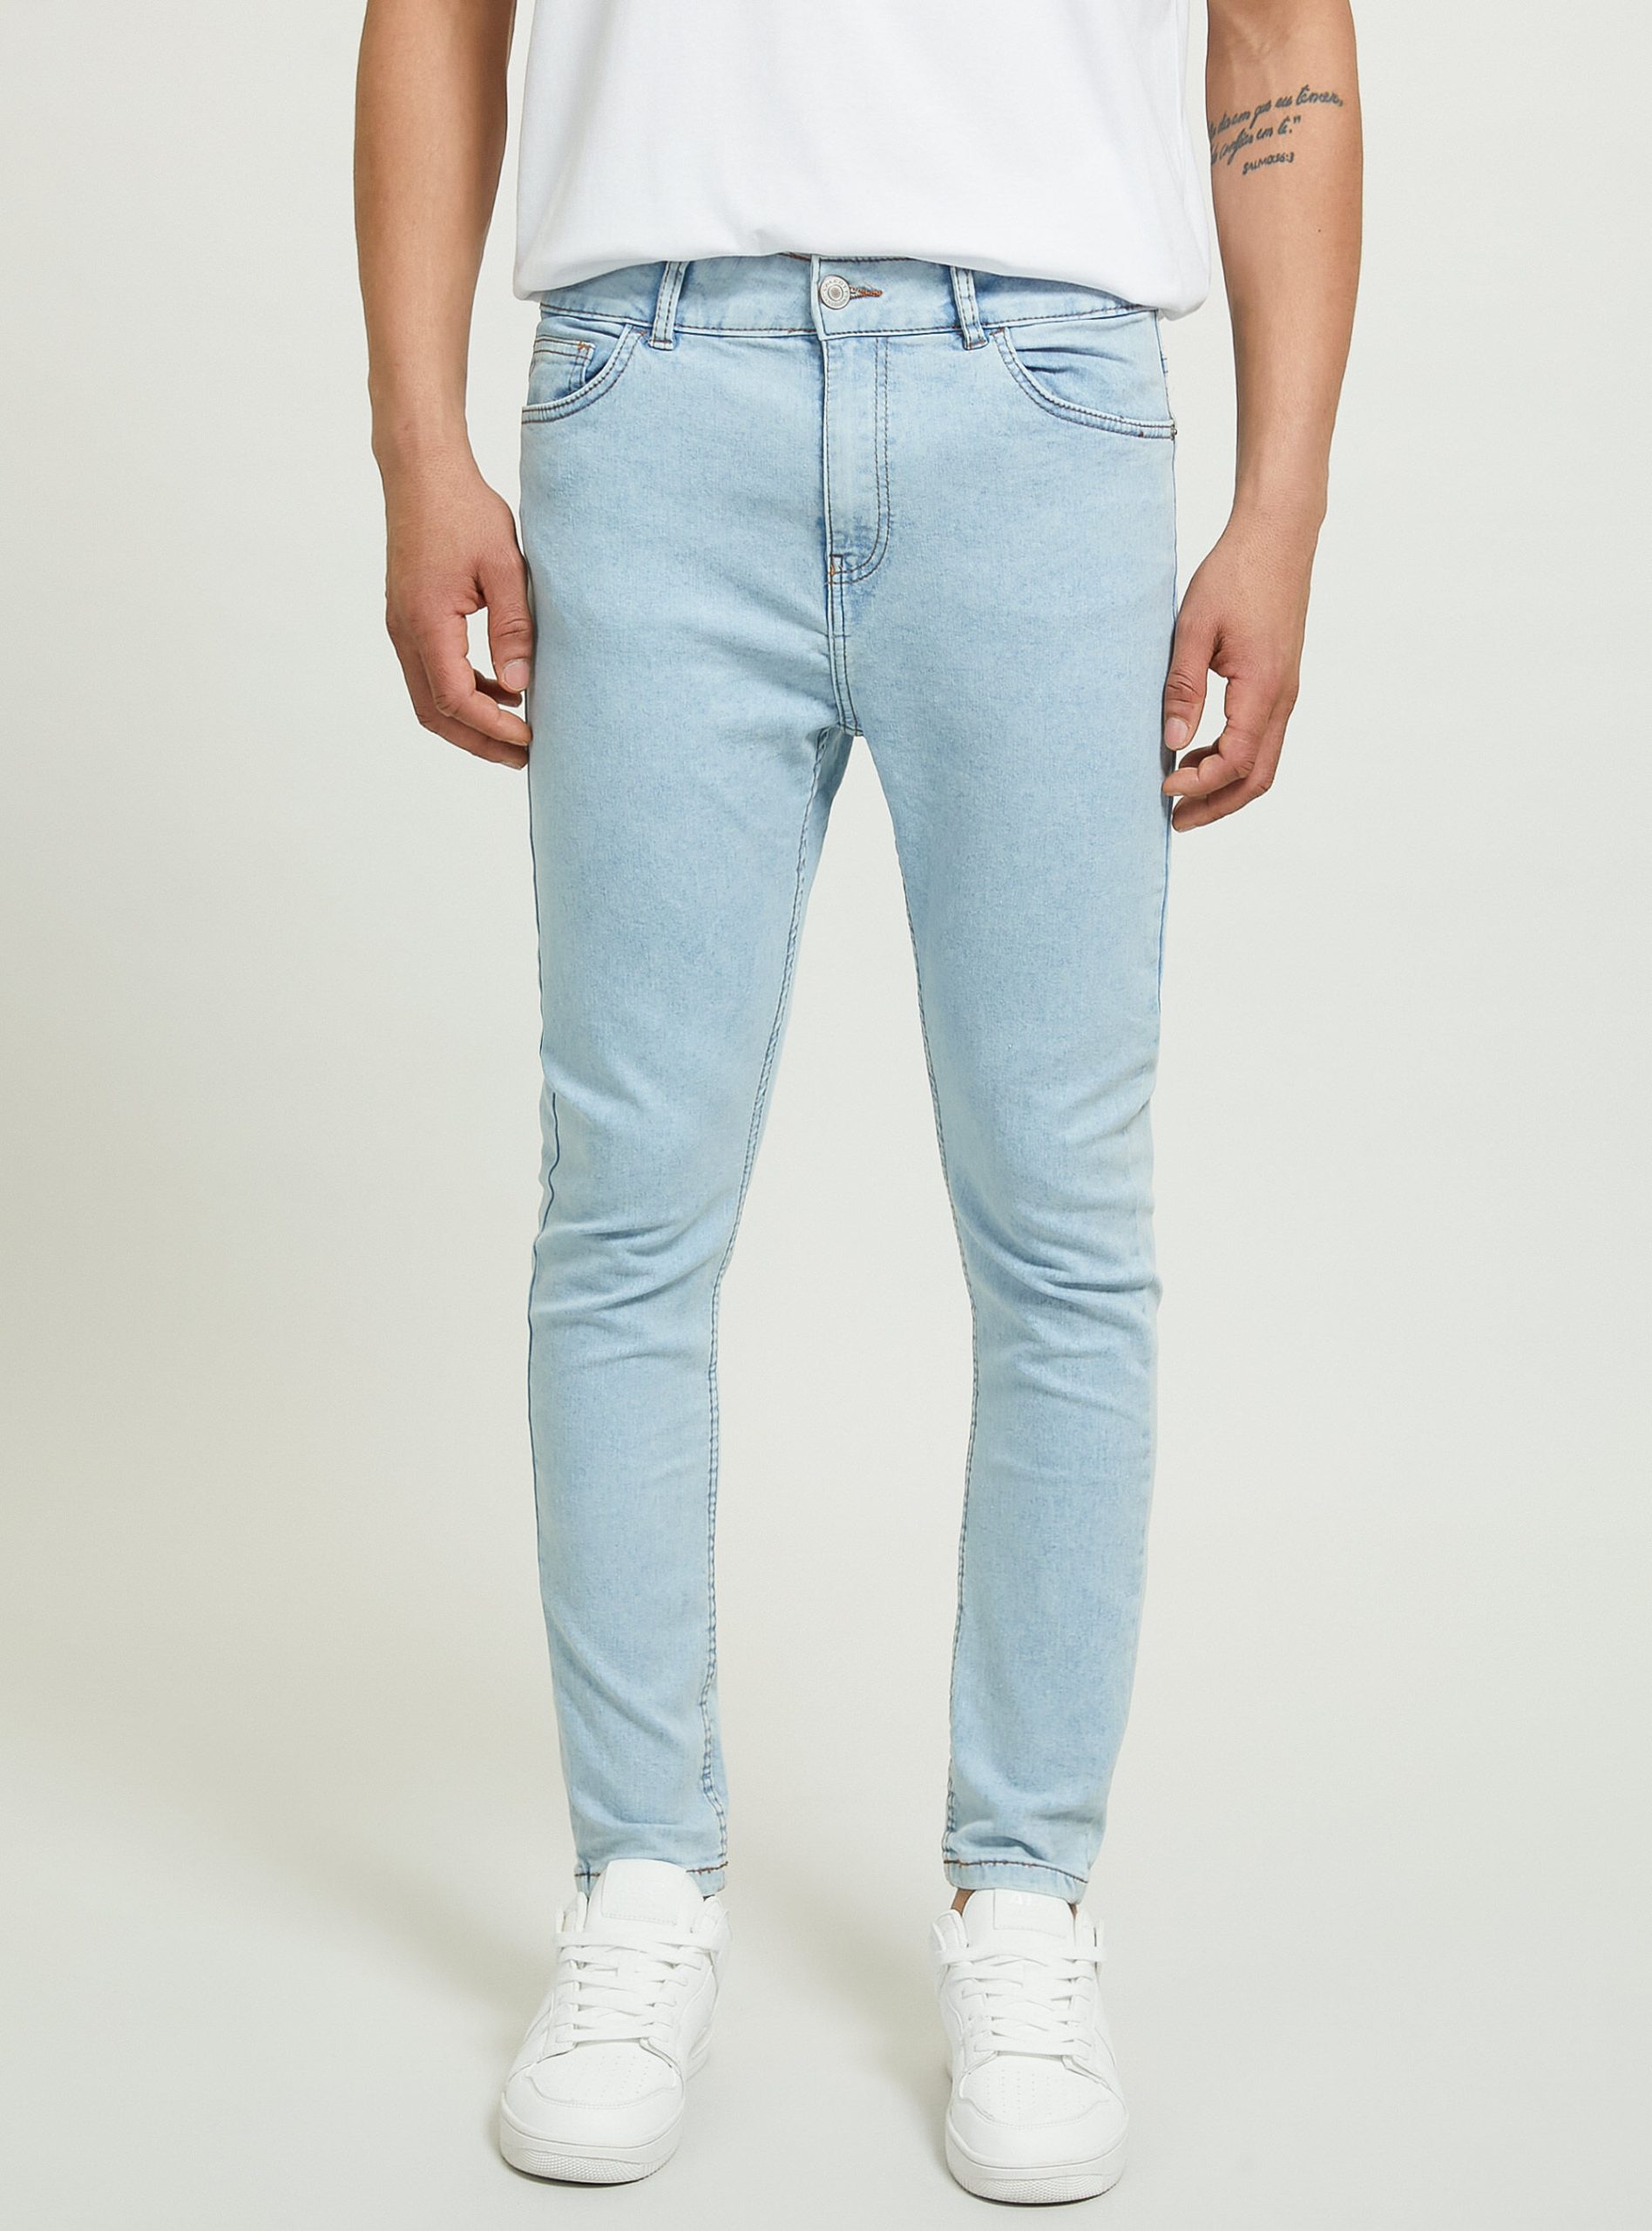 D007 Light Azure Jeans Super Skinny Fit Stretch Denim Jeans Kaufen Männer Alcott – 1